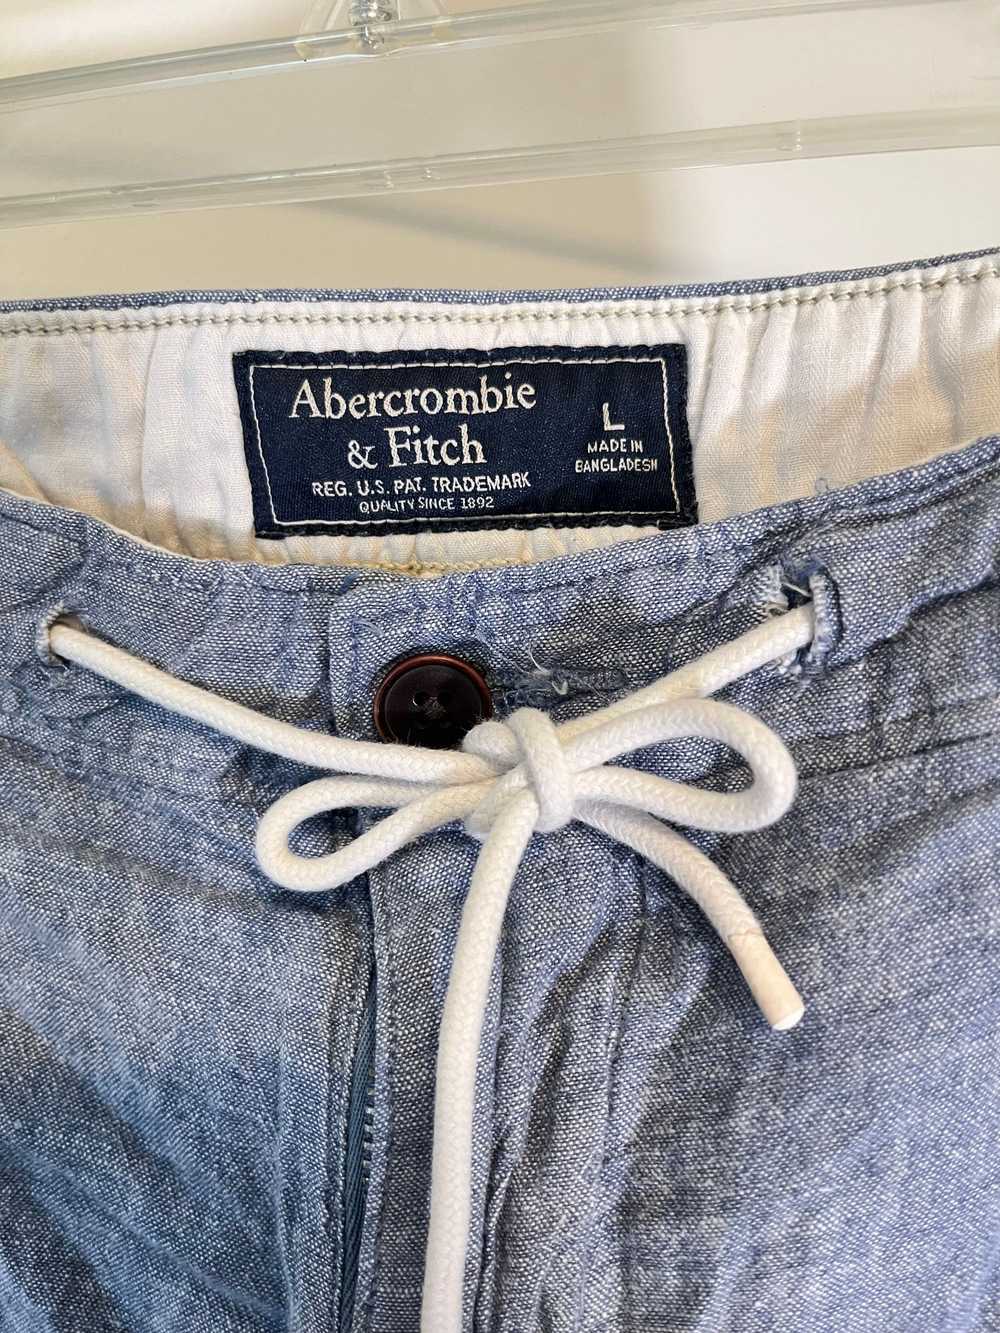 Abercrombie & Fitch Linen Blend Shorts - image 3